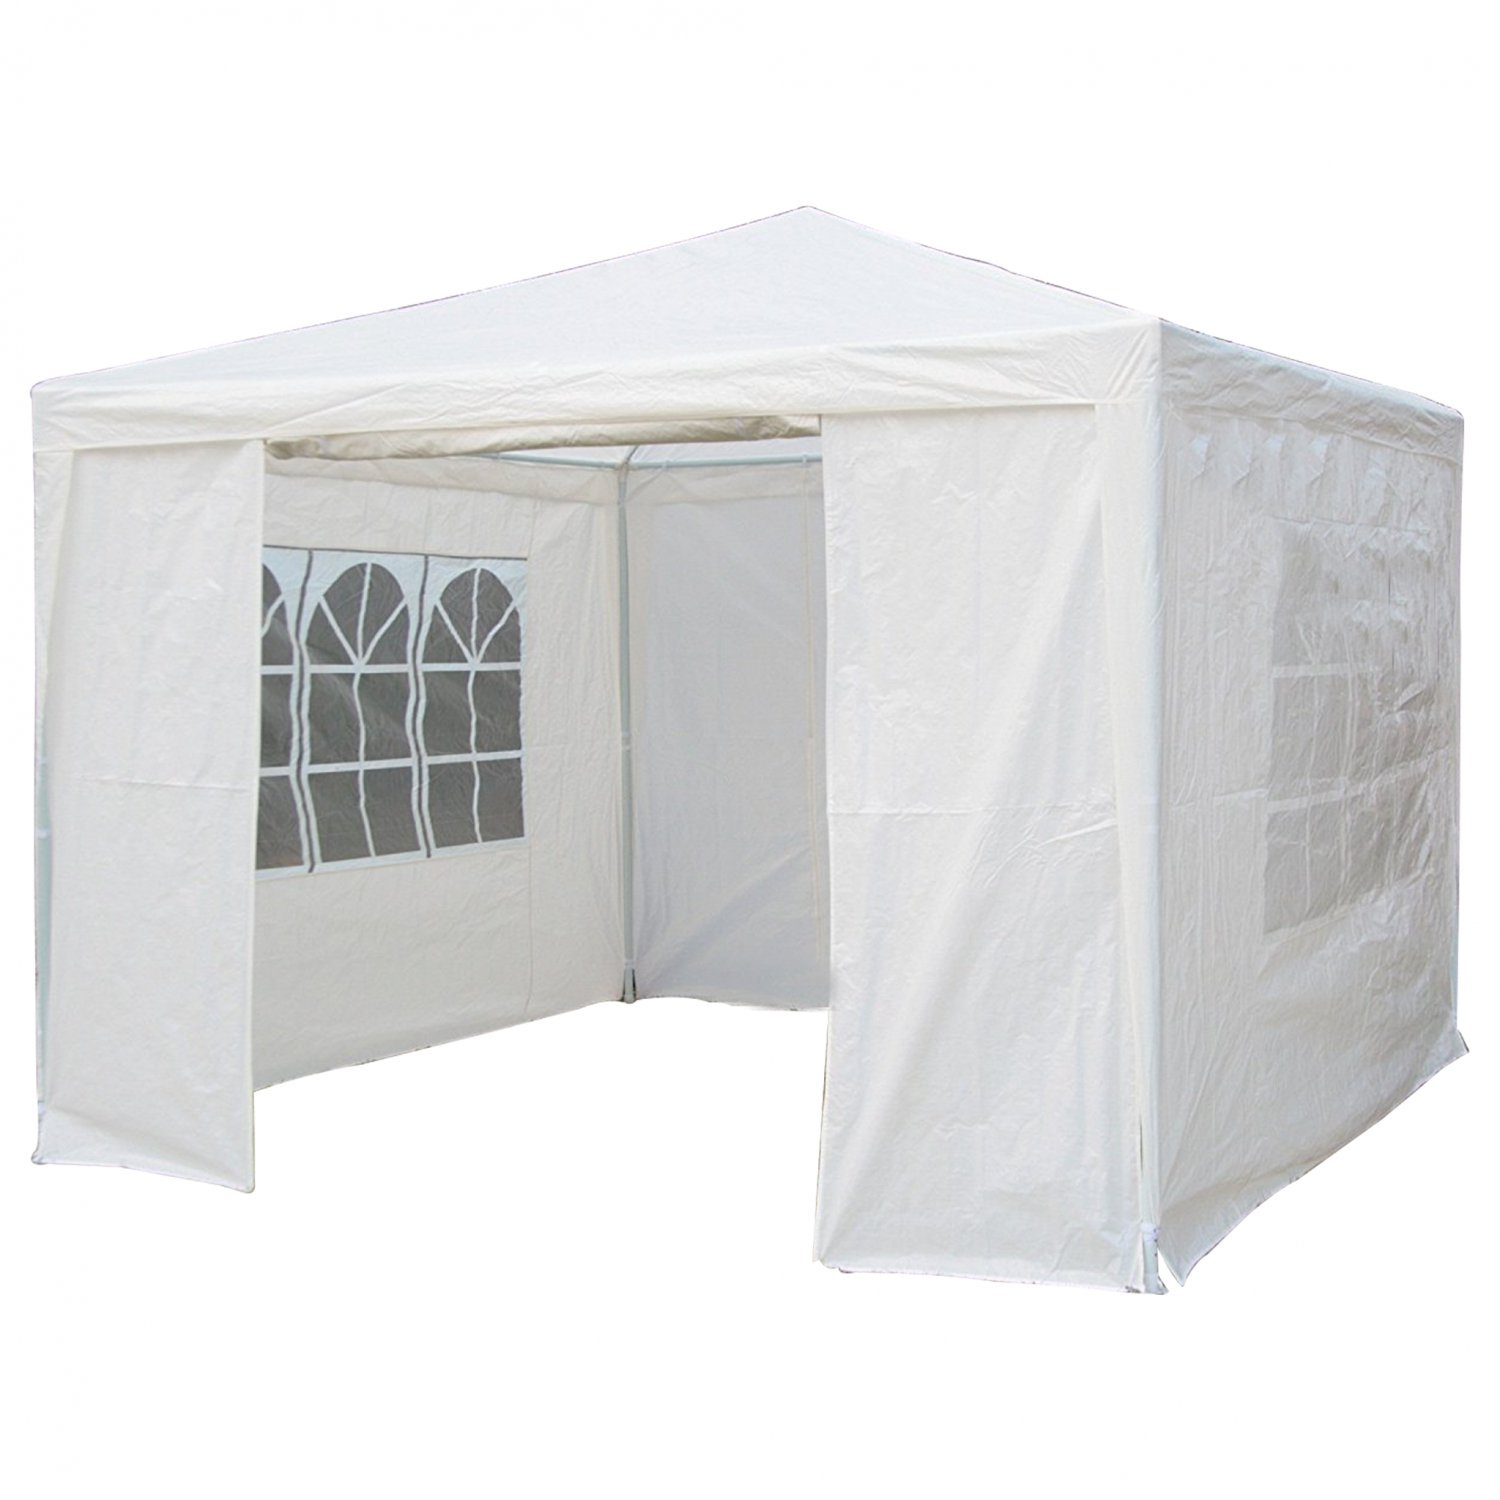 3m x 3m White Waterproof Garden Gazebo Marquee Awning Tent